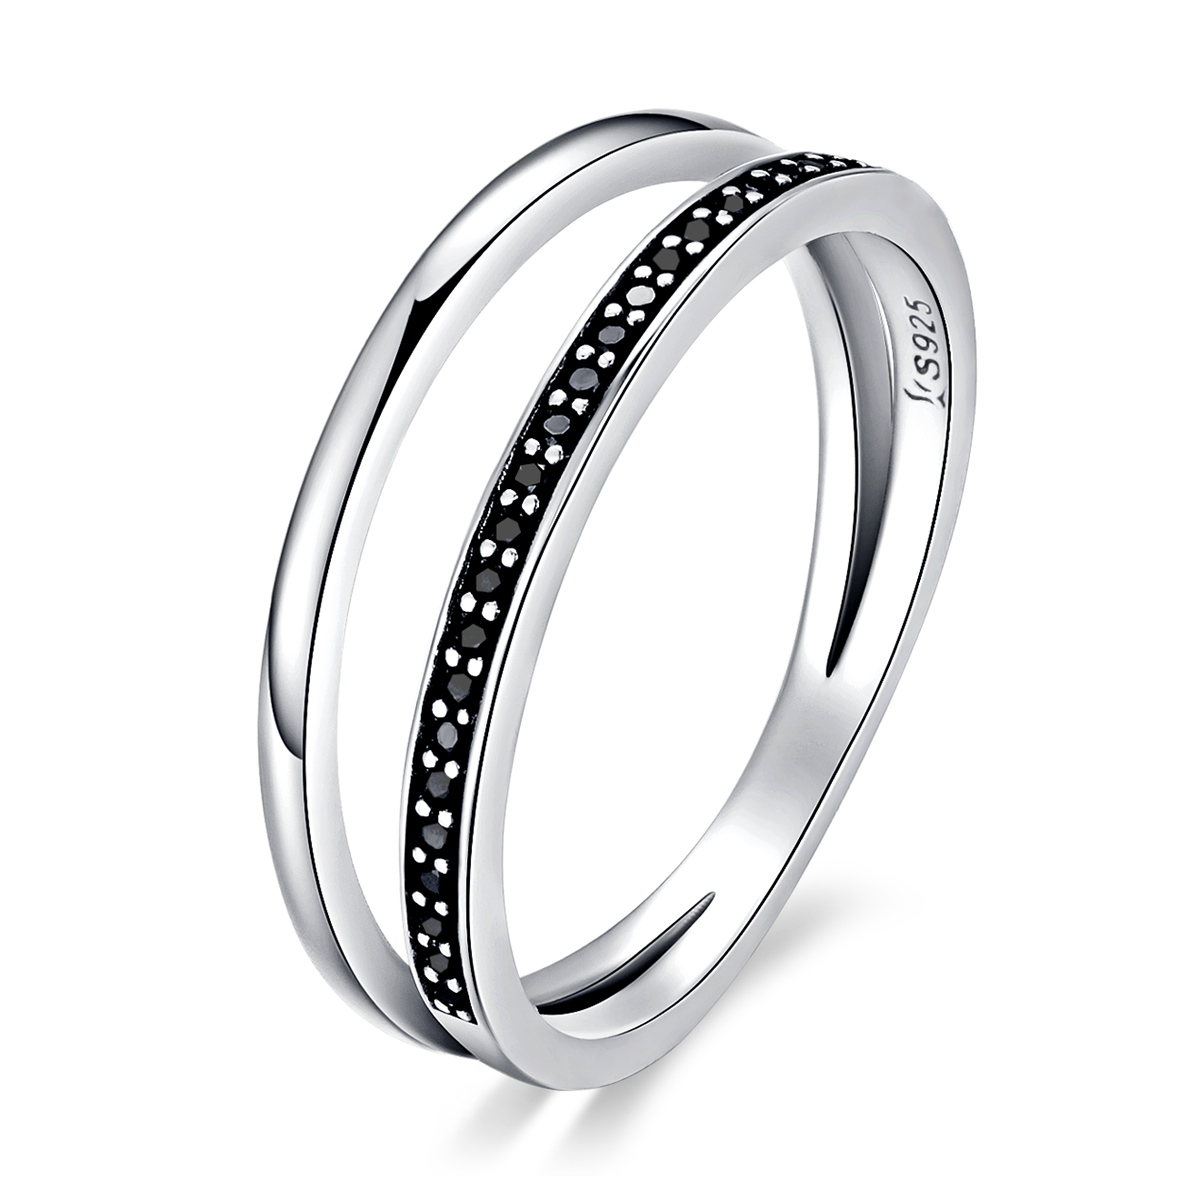 Y0154 Stříbrný dvojitý prsten se zirkony ČERNÝ Velikost: 9 (EU: 59 - 61)